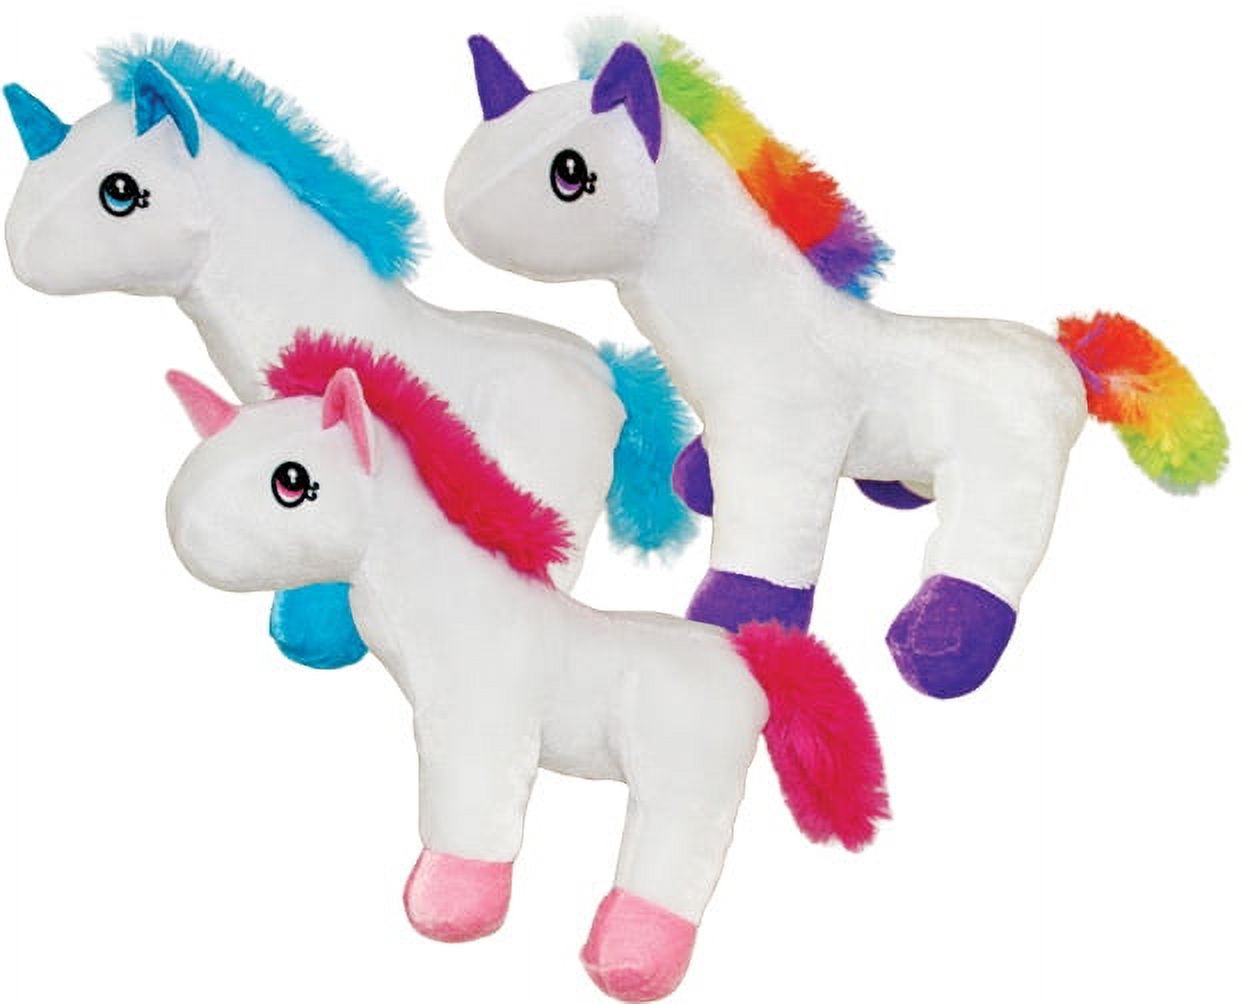 Plush Pal 12" Soft & Fluffy Purple Unicorn Stuffed Animal Toy with Rainbow Tail And Mane - image 2 of 5